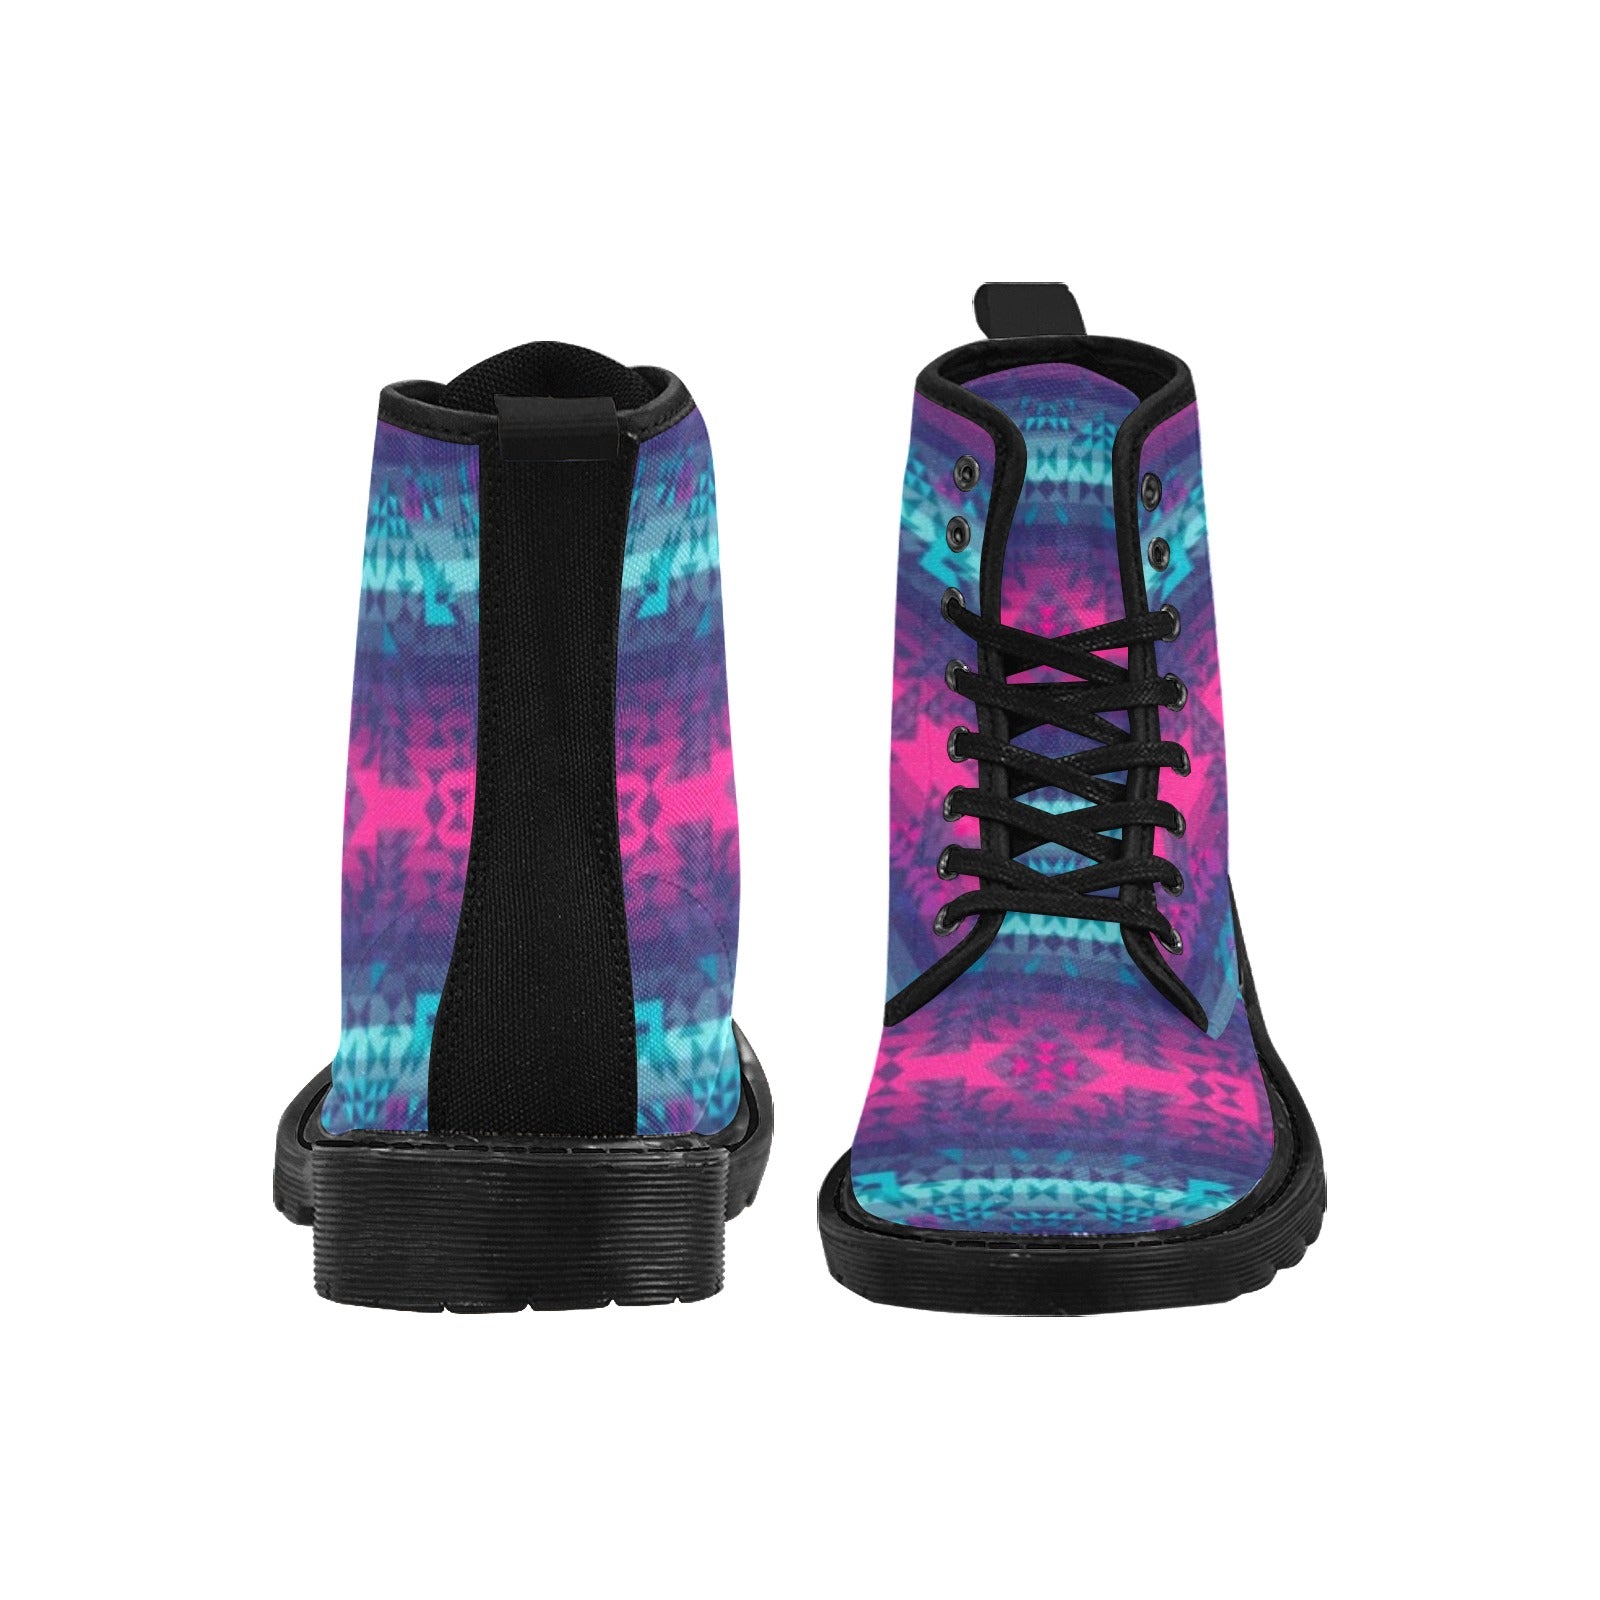 Dimensional Brightburn Boots for Men (Black)